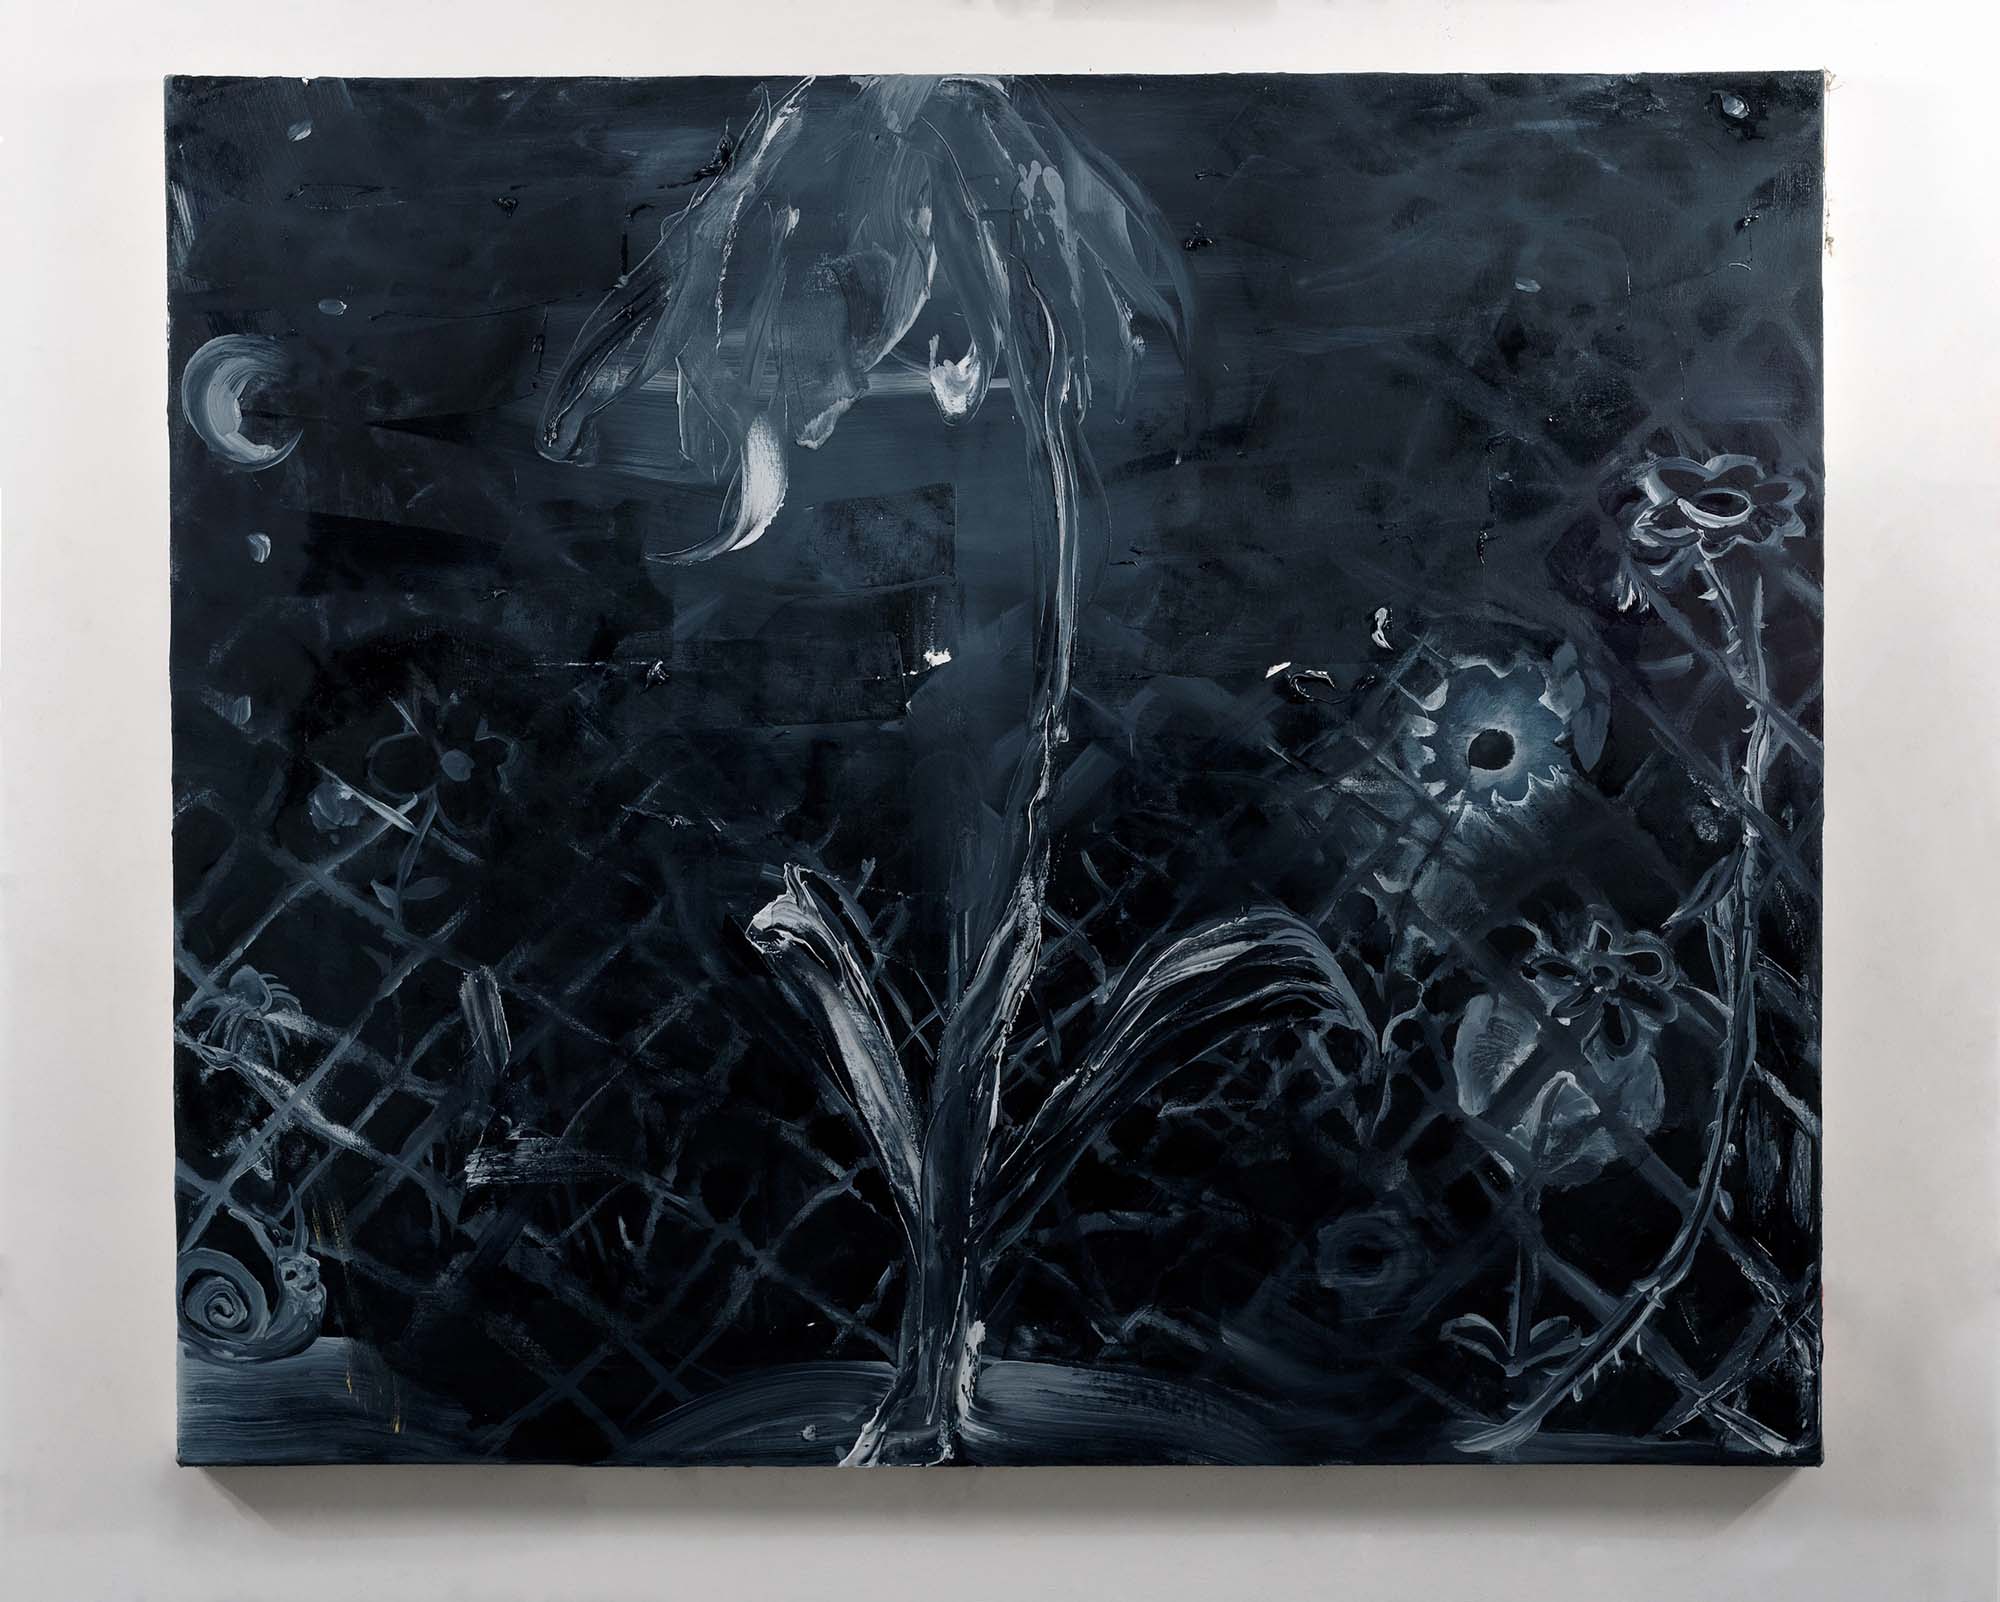 Tsailing Tseng, Midnight gardening, oil on canvas, 38 x 45 inches, 2019